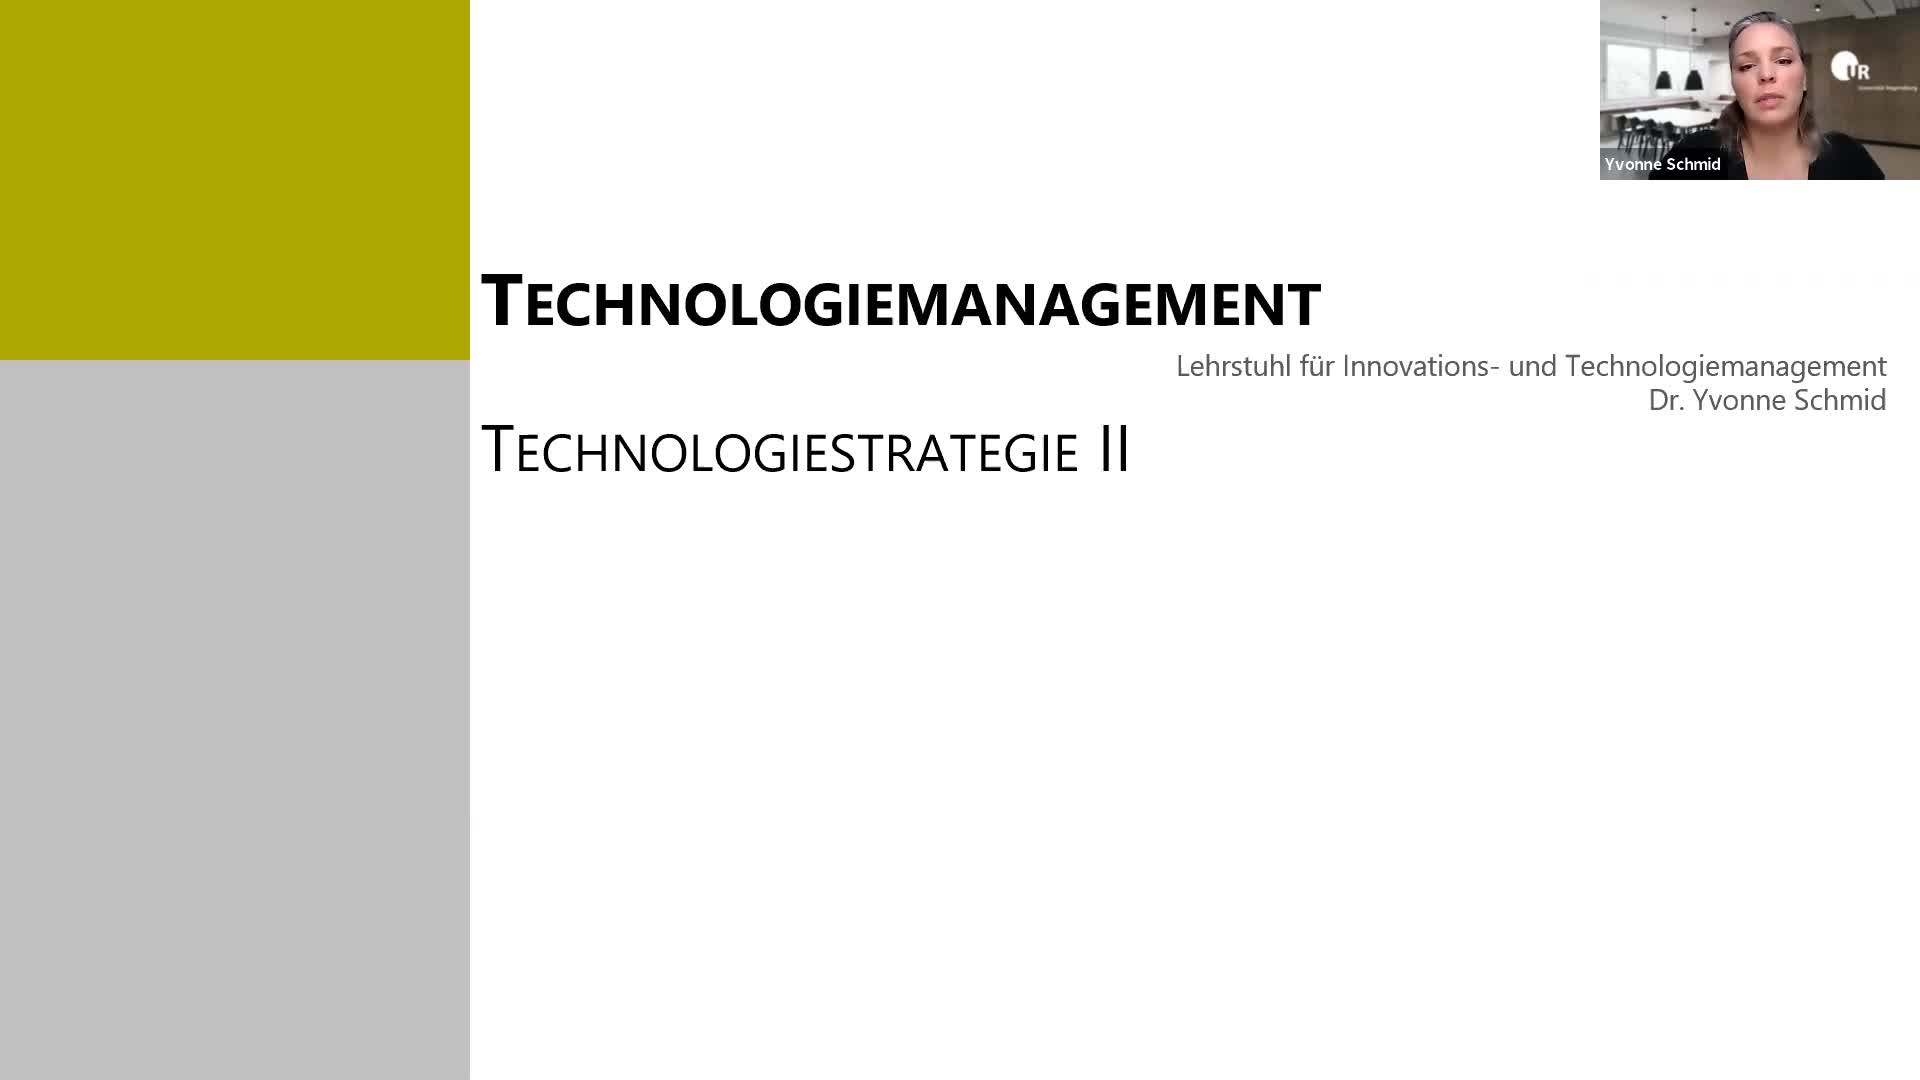 20210512_TM_Technologiestrategie II